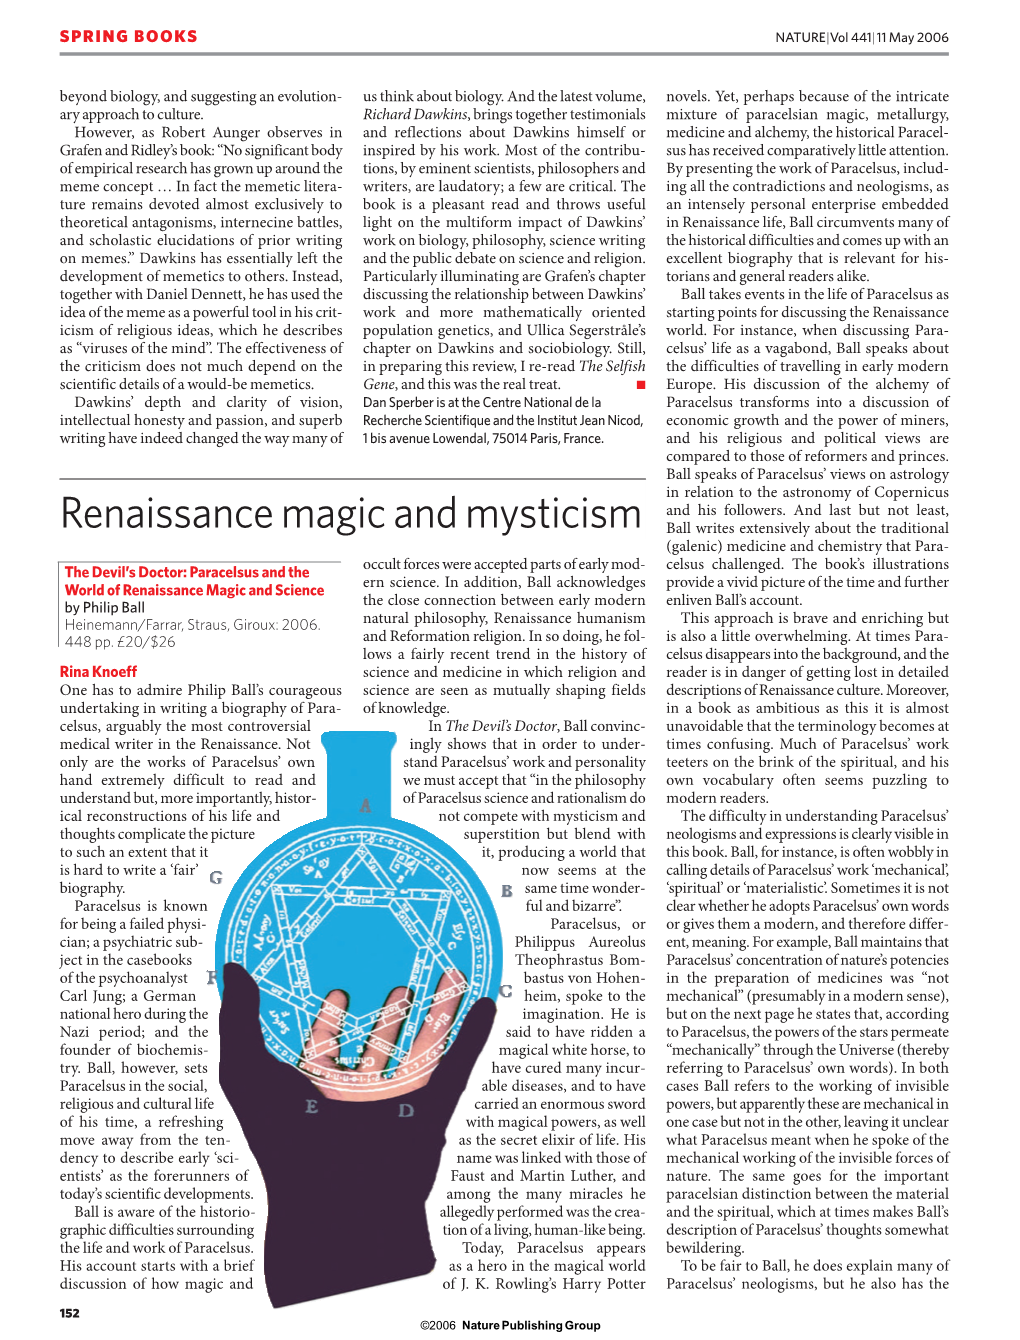 Renaissance Magic and Mysticism